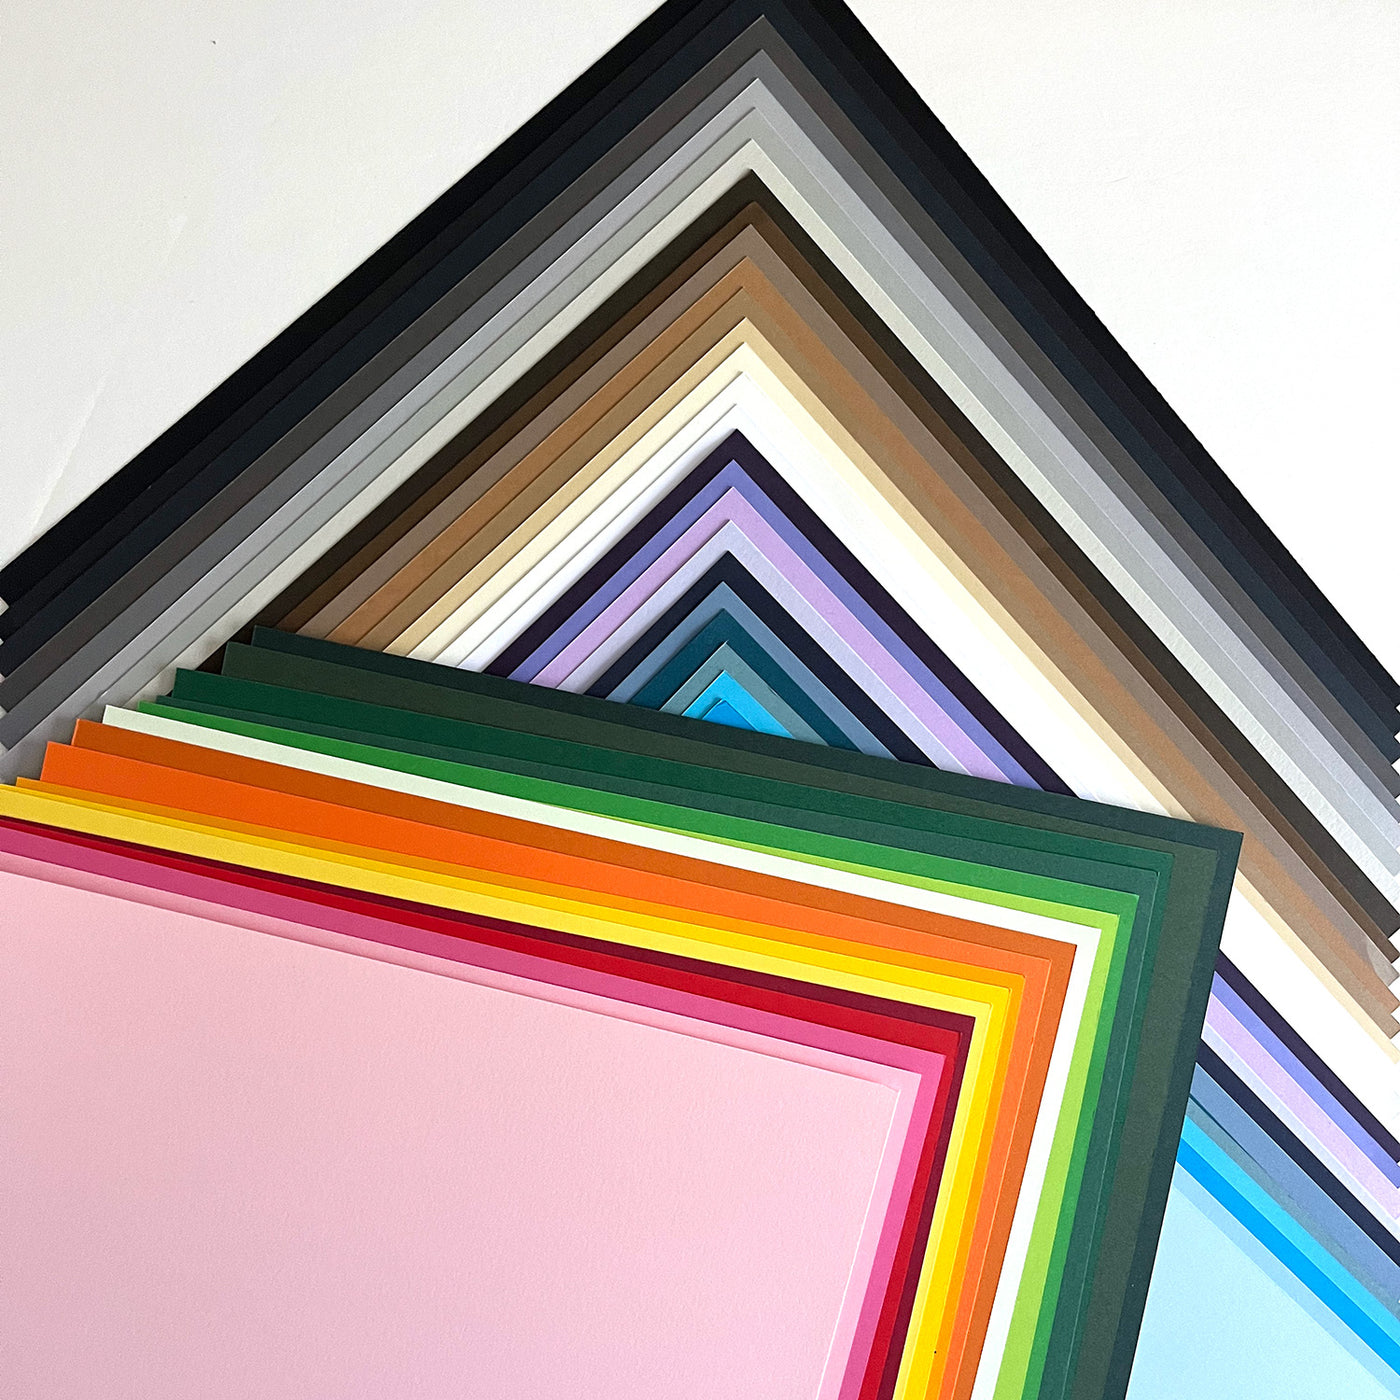 12x12 cardstock shop multi-colored gradient - glitter cardstock